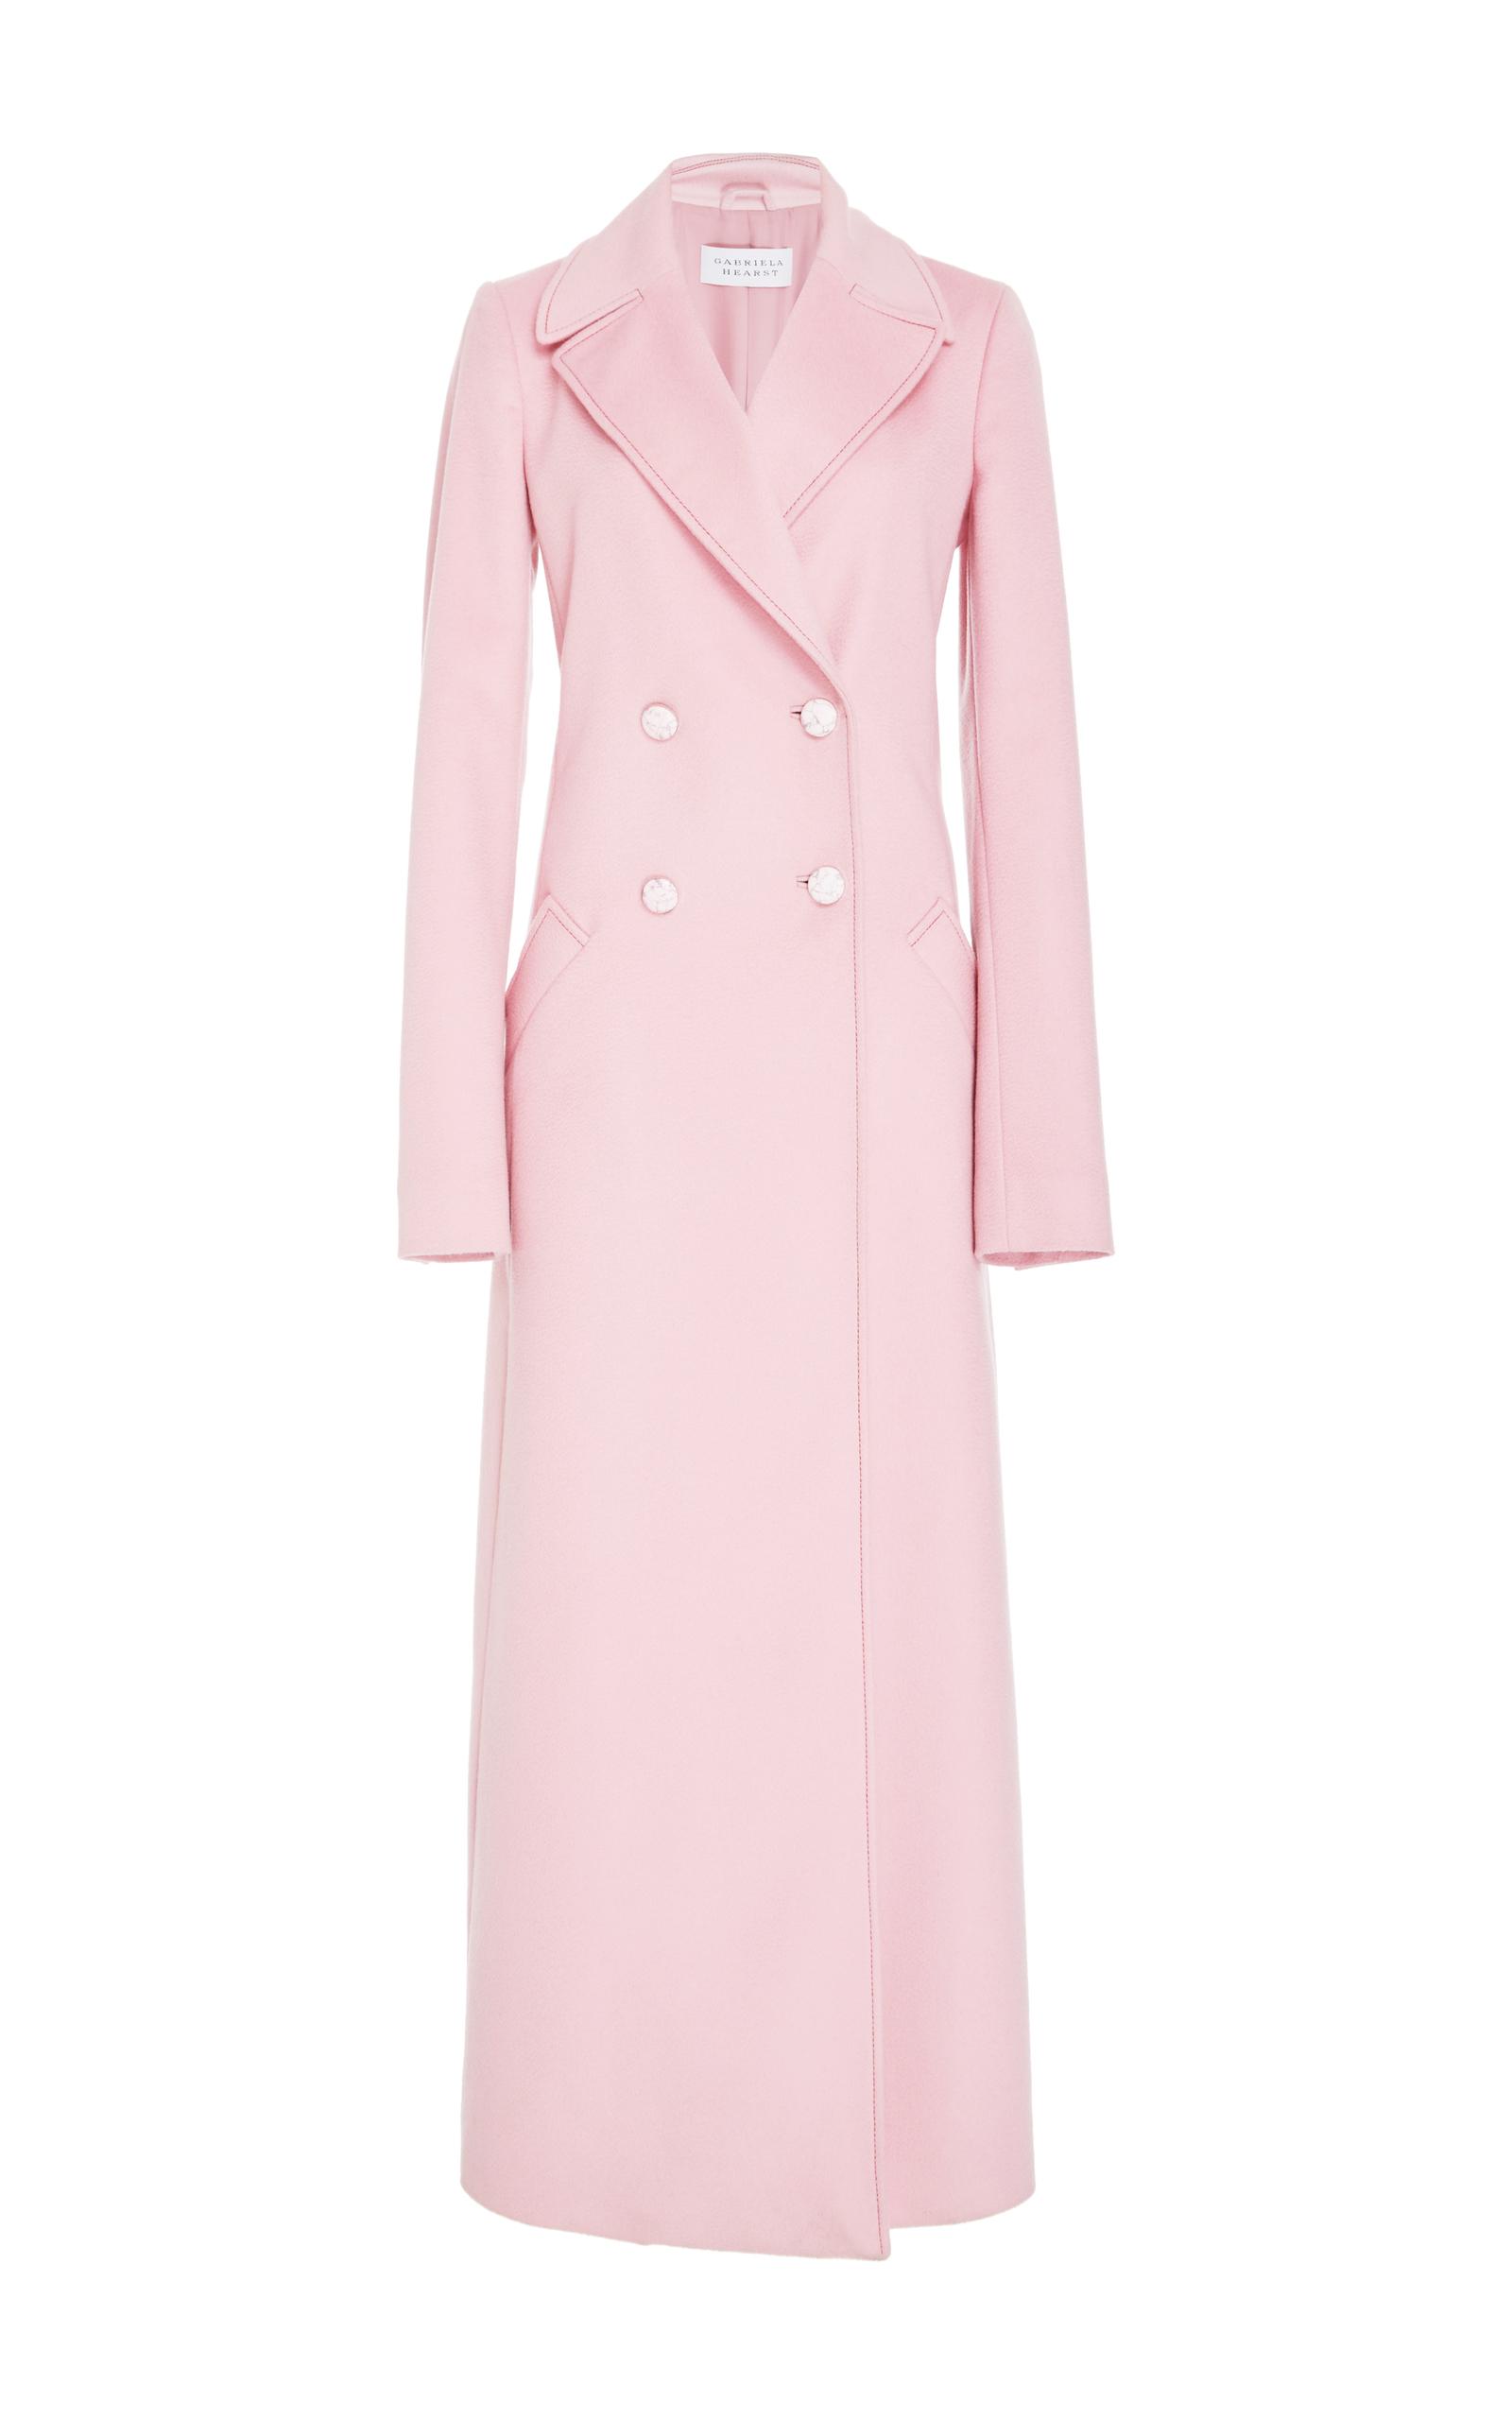 Lyst - Gabriela Hearst Isabella Cashmere Coat in Pink